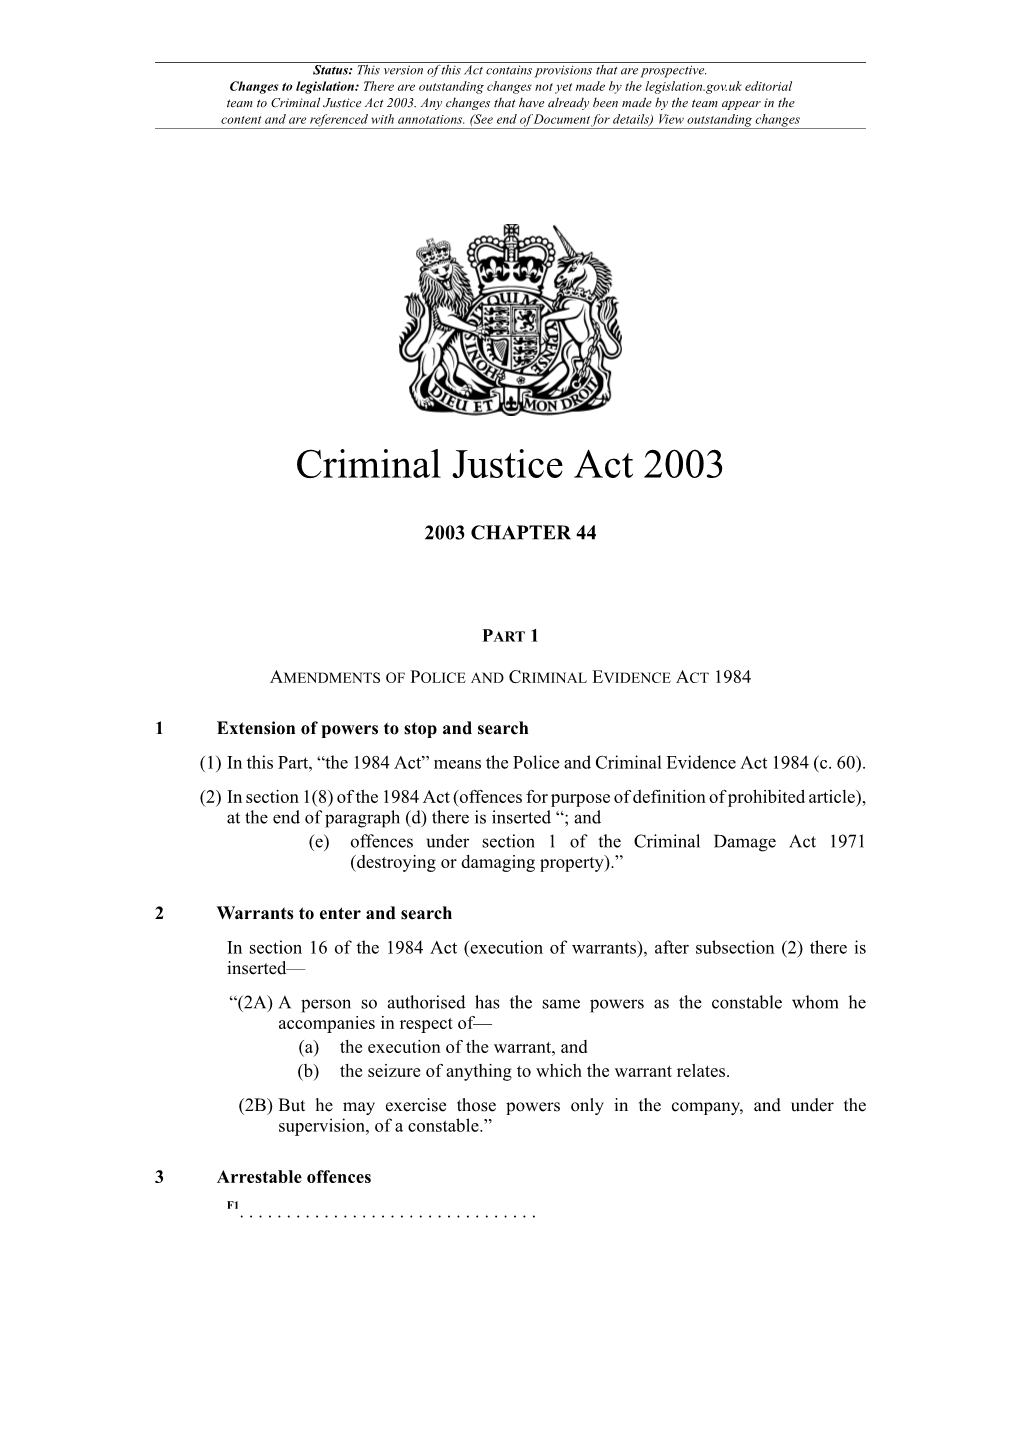 Criminal Justice Act 2003